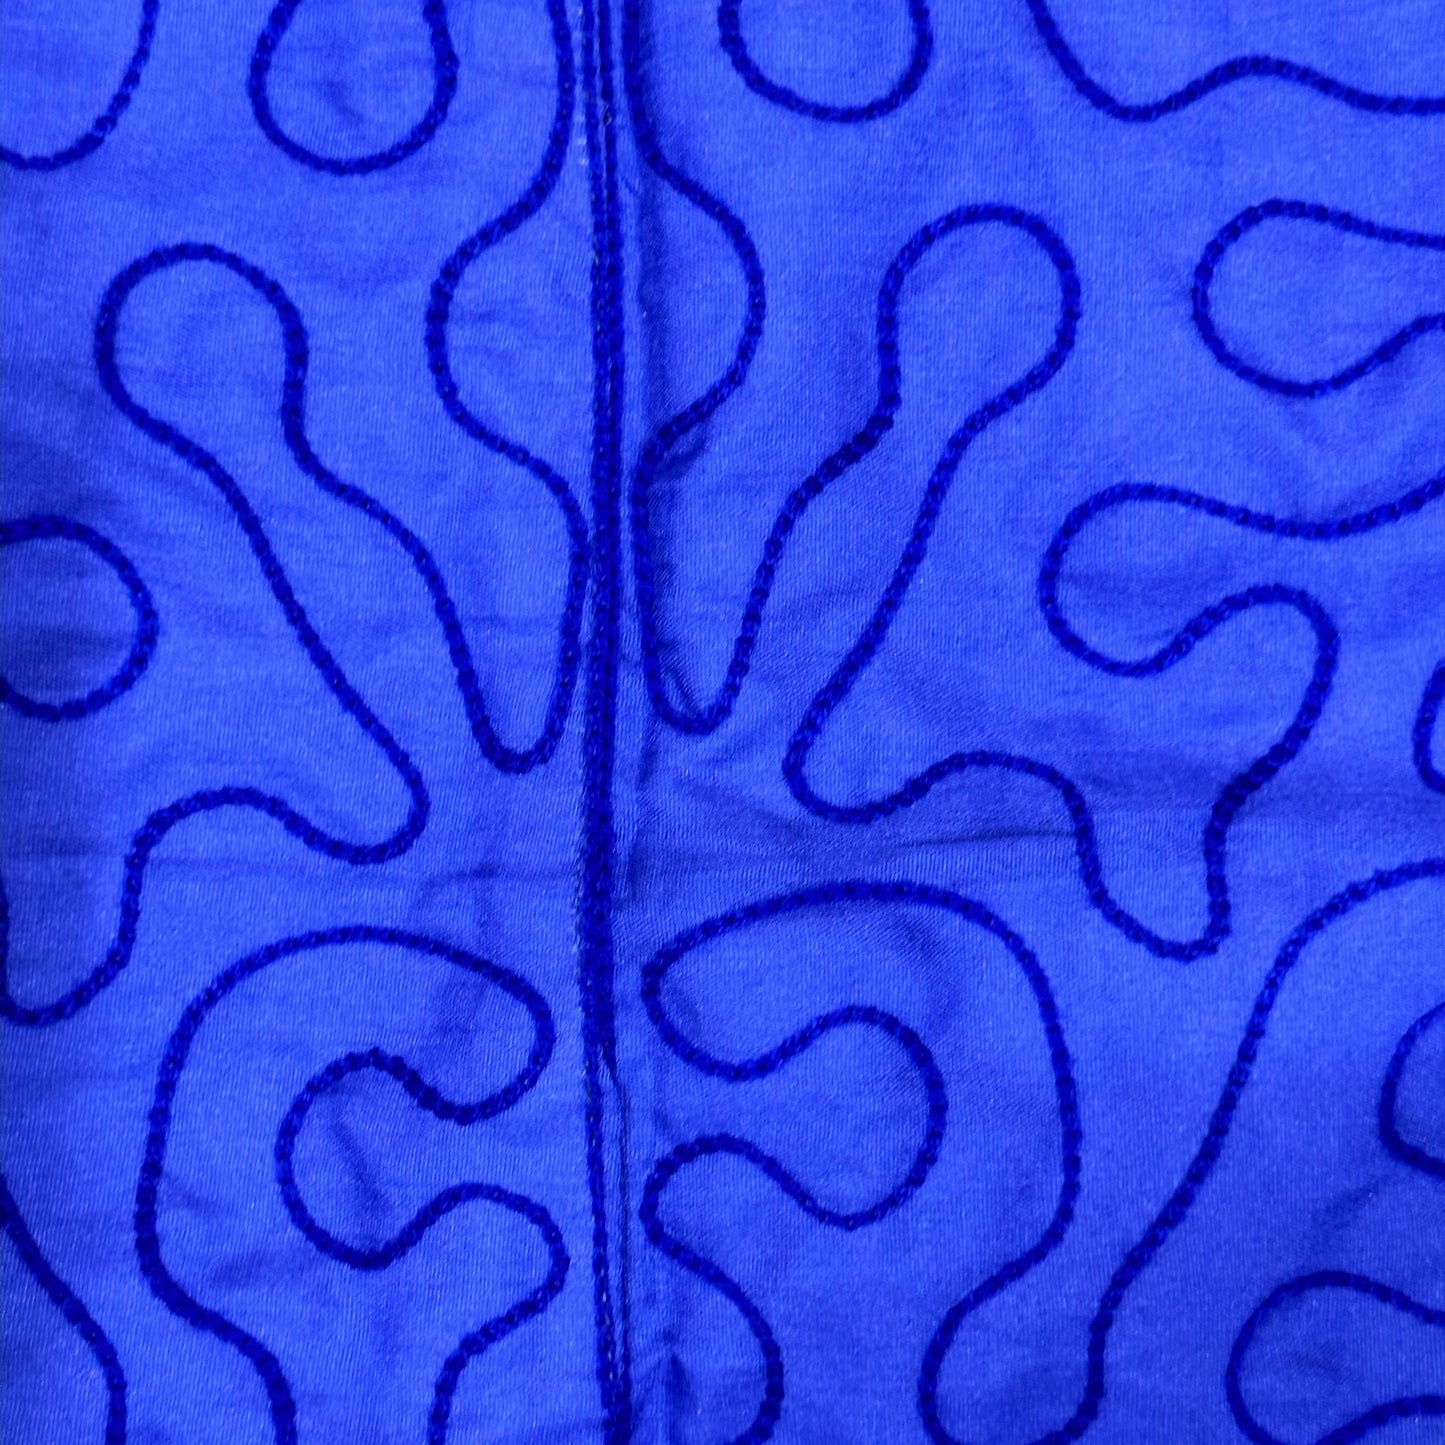 Hand Embroidered Koti(Waistcoat) – Royal Blue